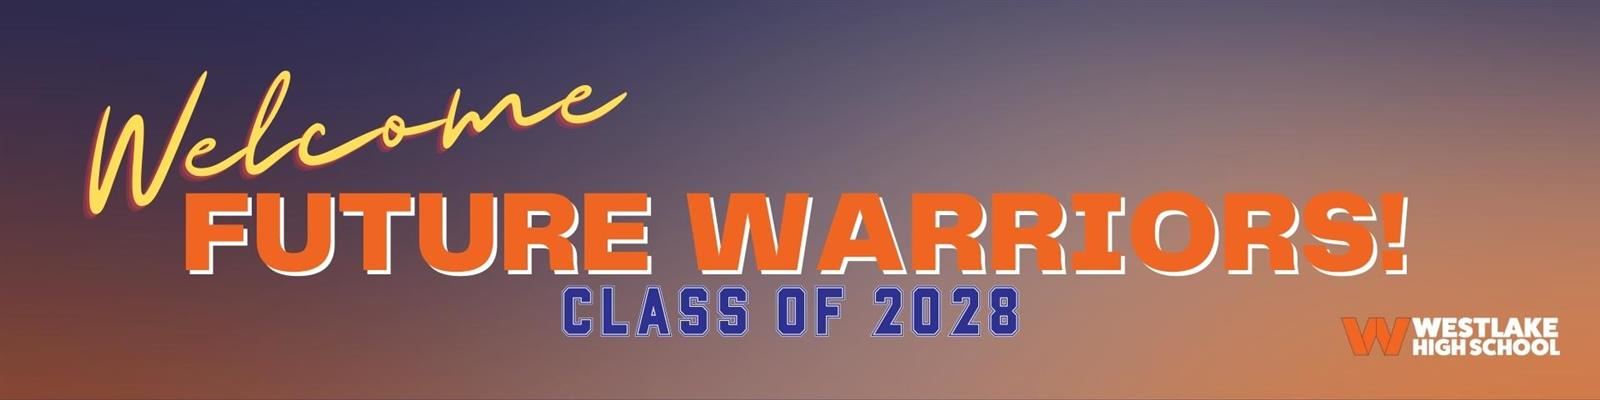 Welcome Future Warriors